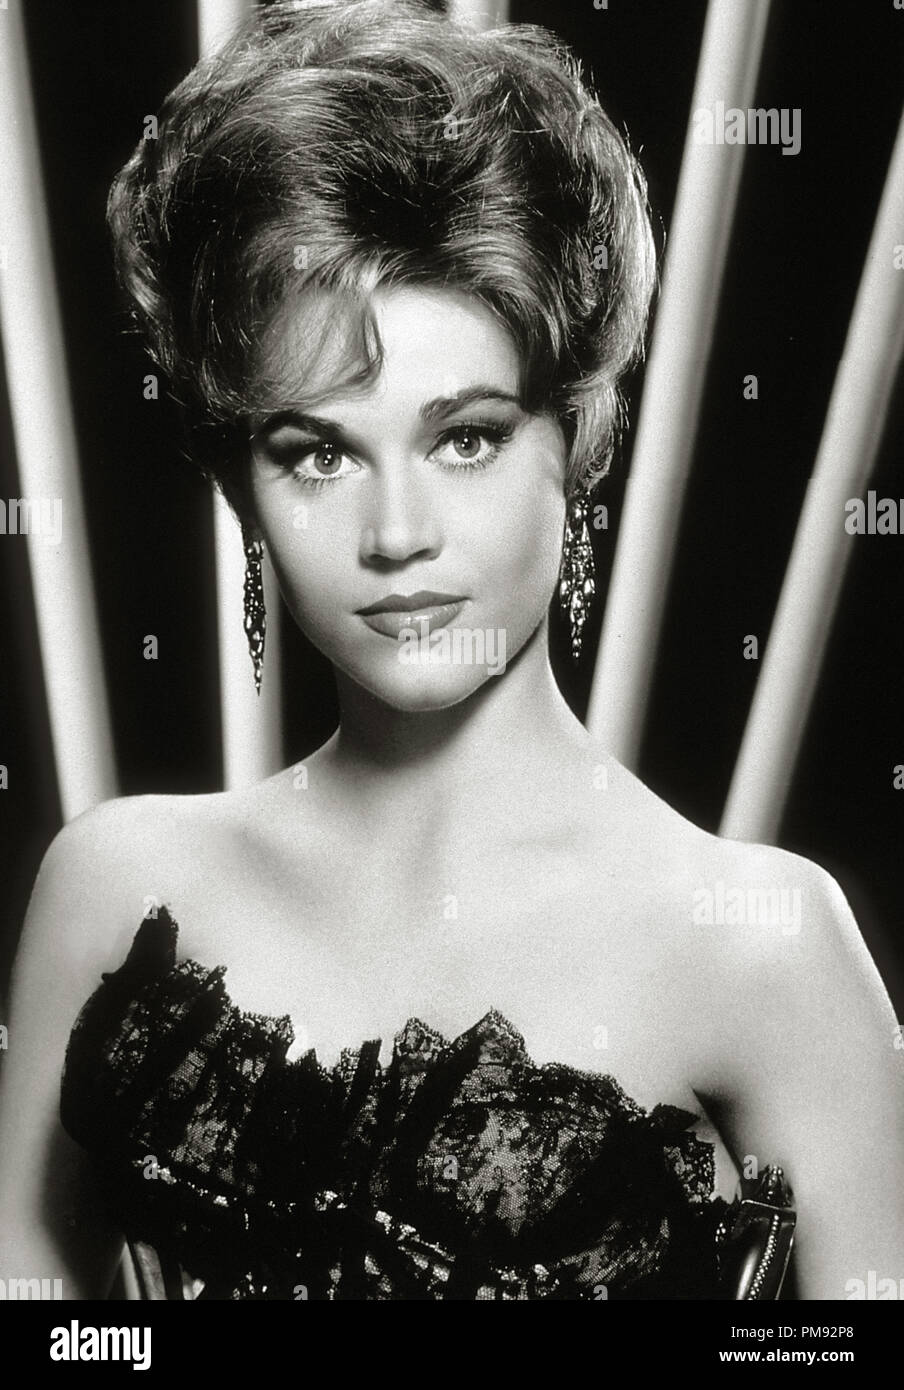 (Archivística Cine Clásico - Jane Fonda retrospectiva) Jane Fonda, circa 1962 Archivo de referencia # 31537 287tha Foto de stock